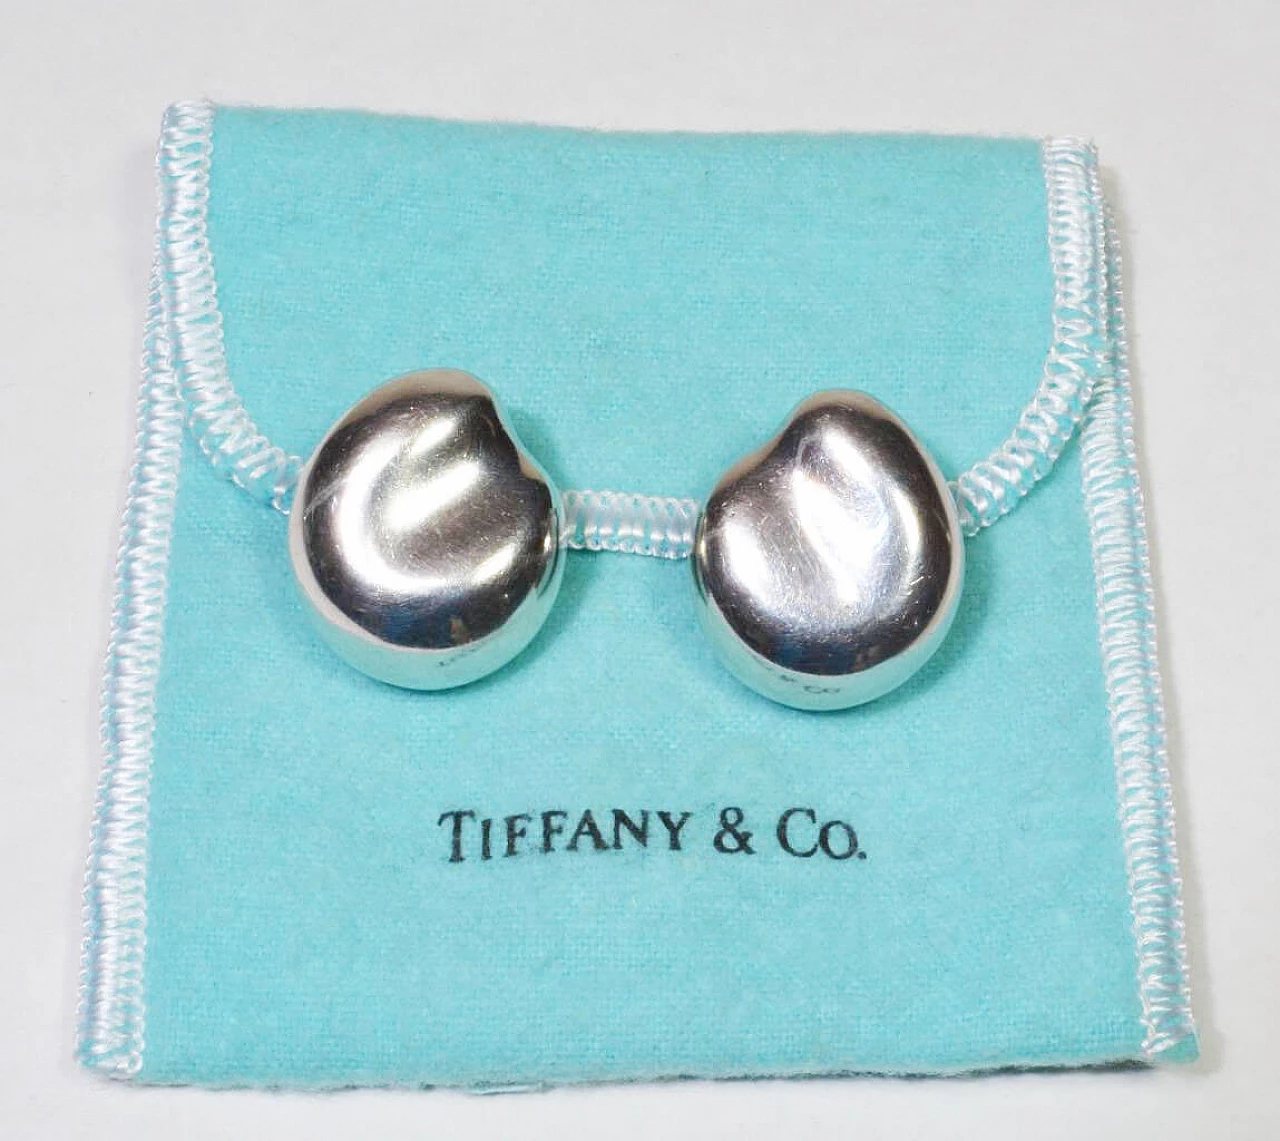 Bean earrings by Elsa Peretti for Tiffany & Co, 1990s 1